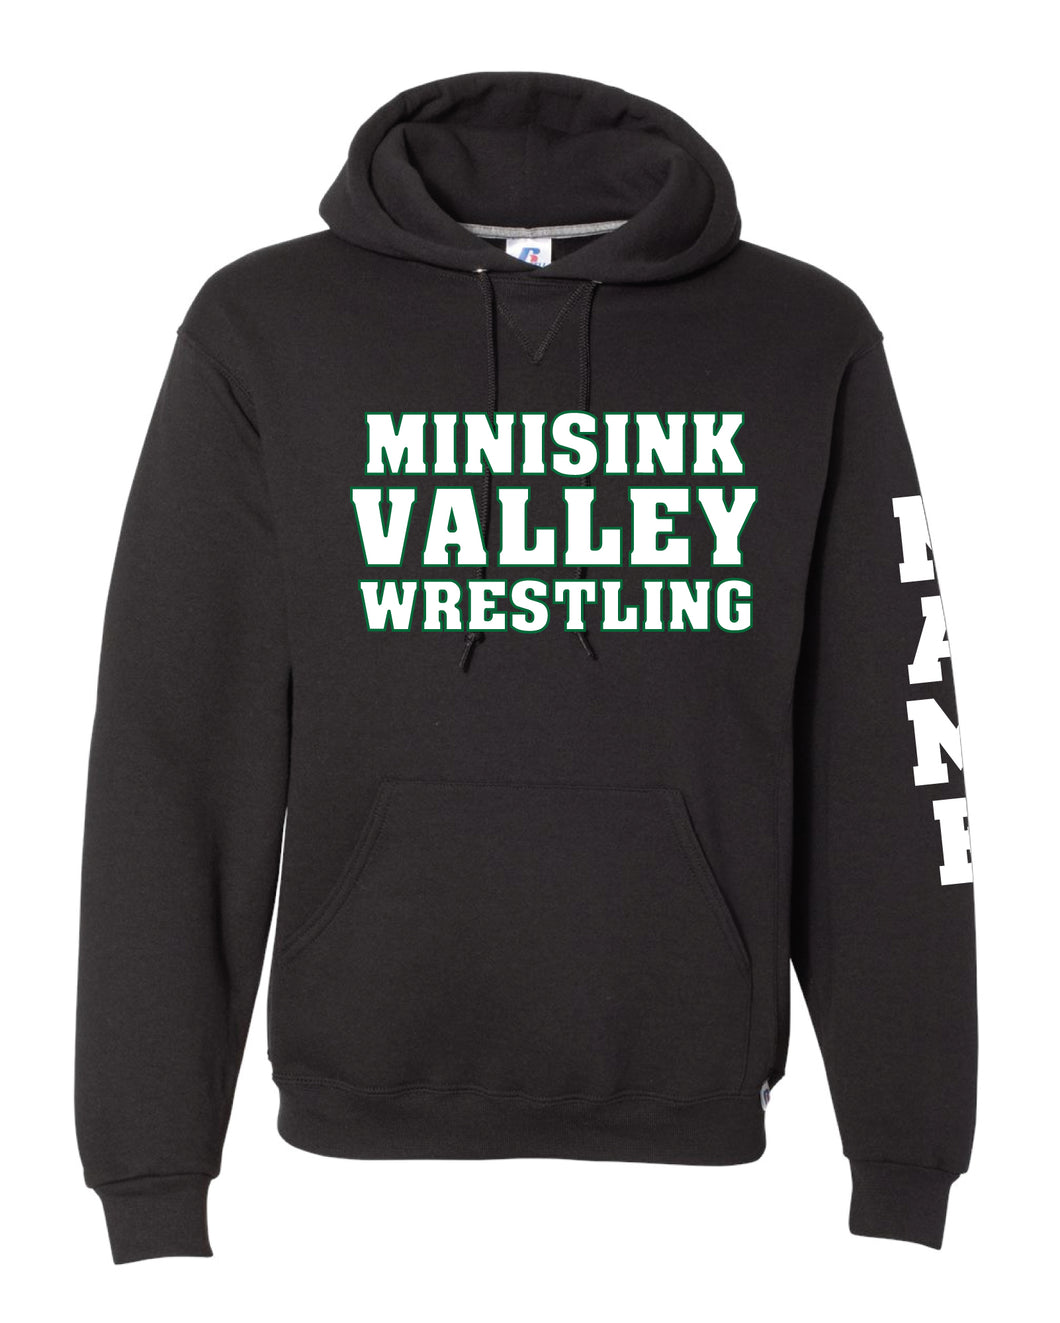 Minisink Valley Wrestling Russell Athletic Cotton Hoodie - Black - 5KounT